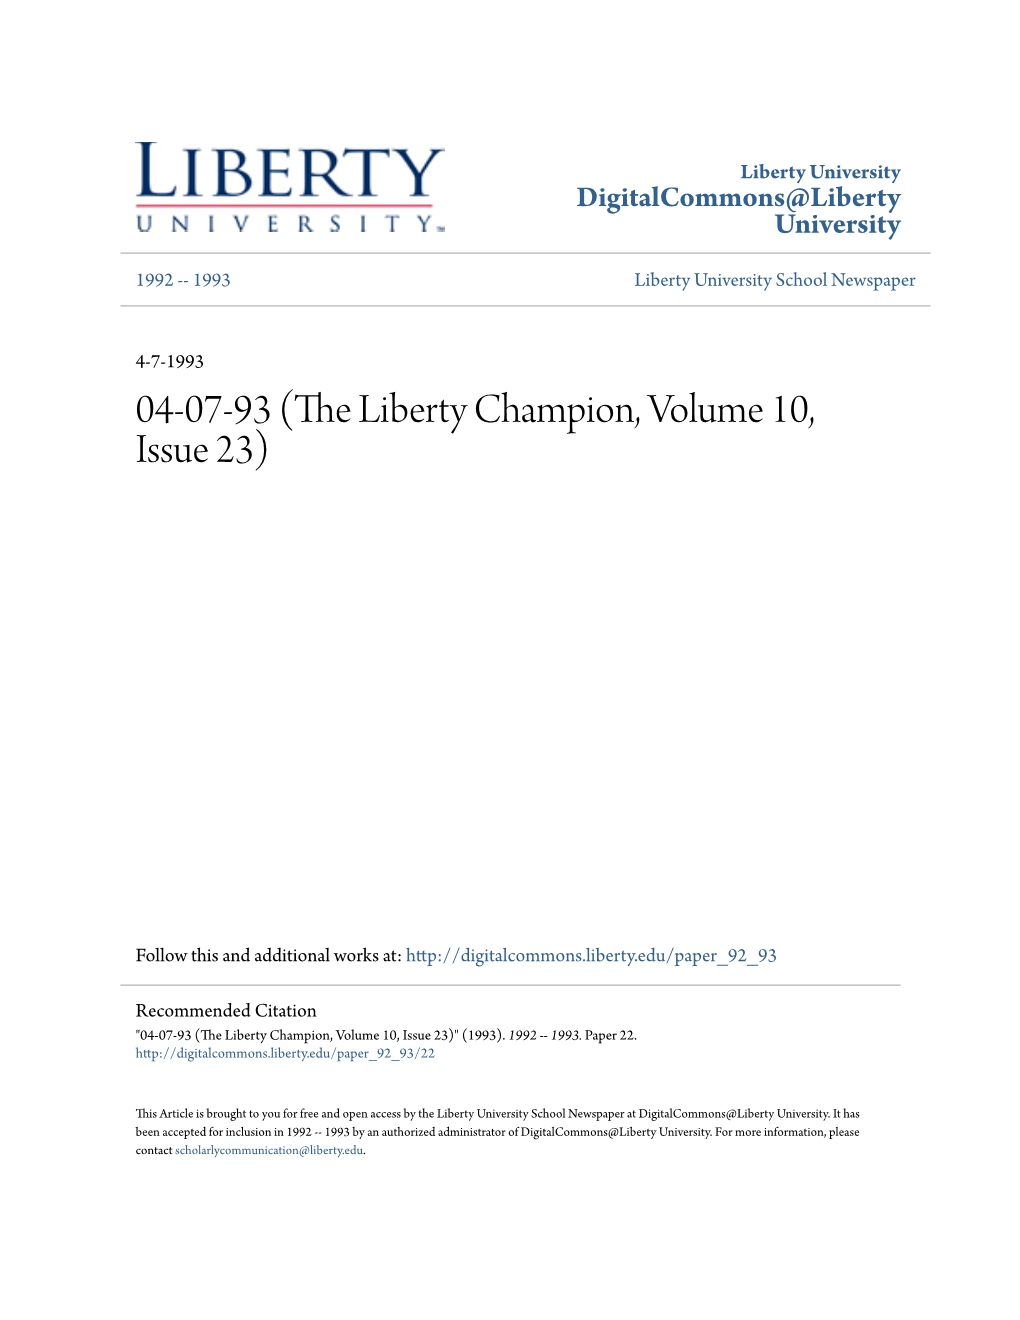 The Liberty Champion, Volume 10, Issue 23)